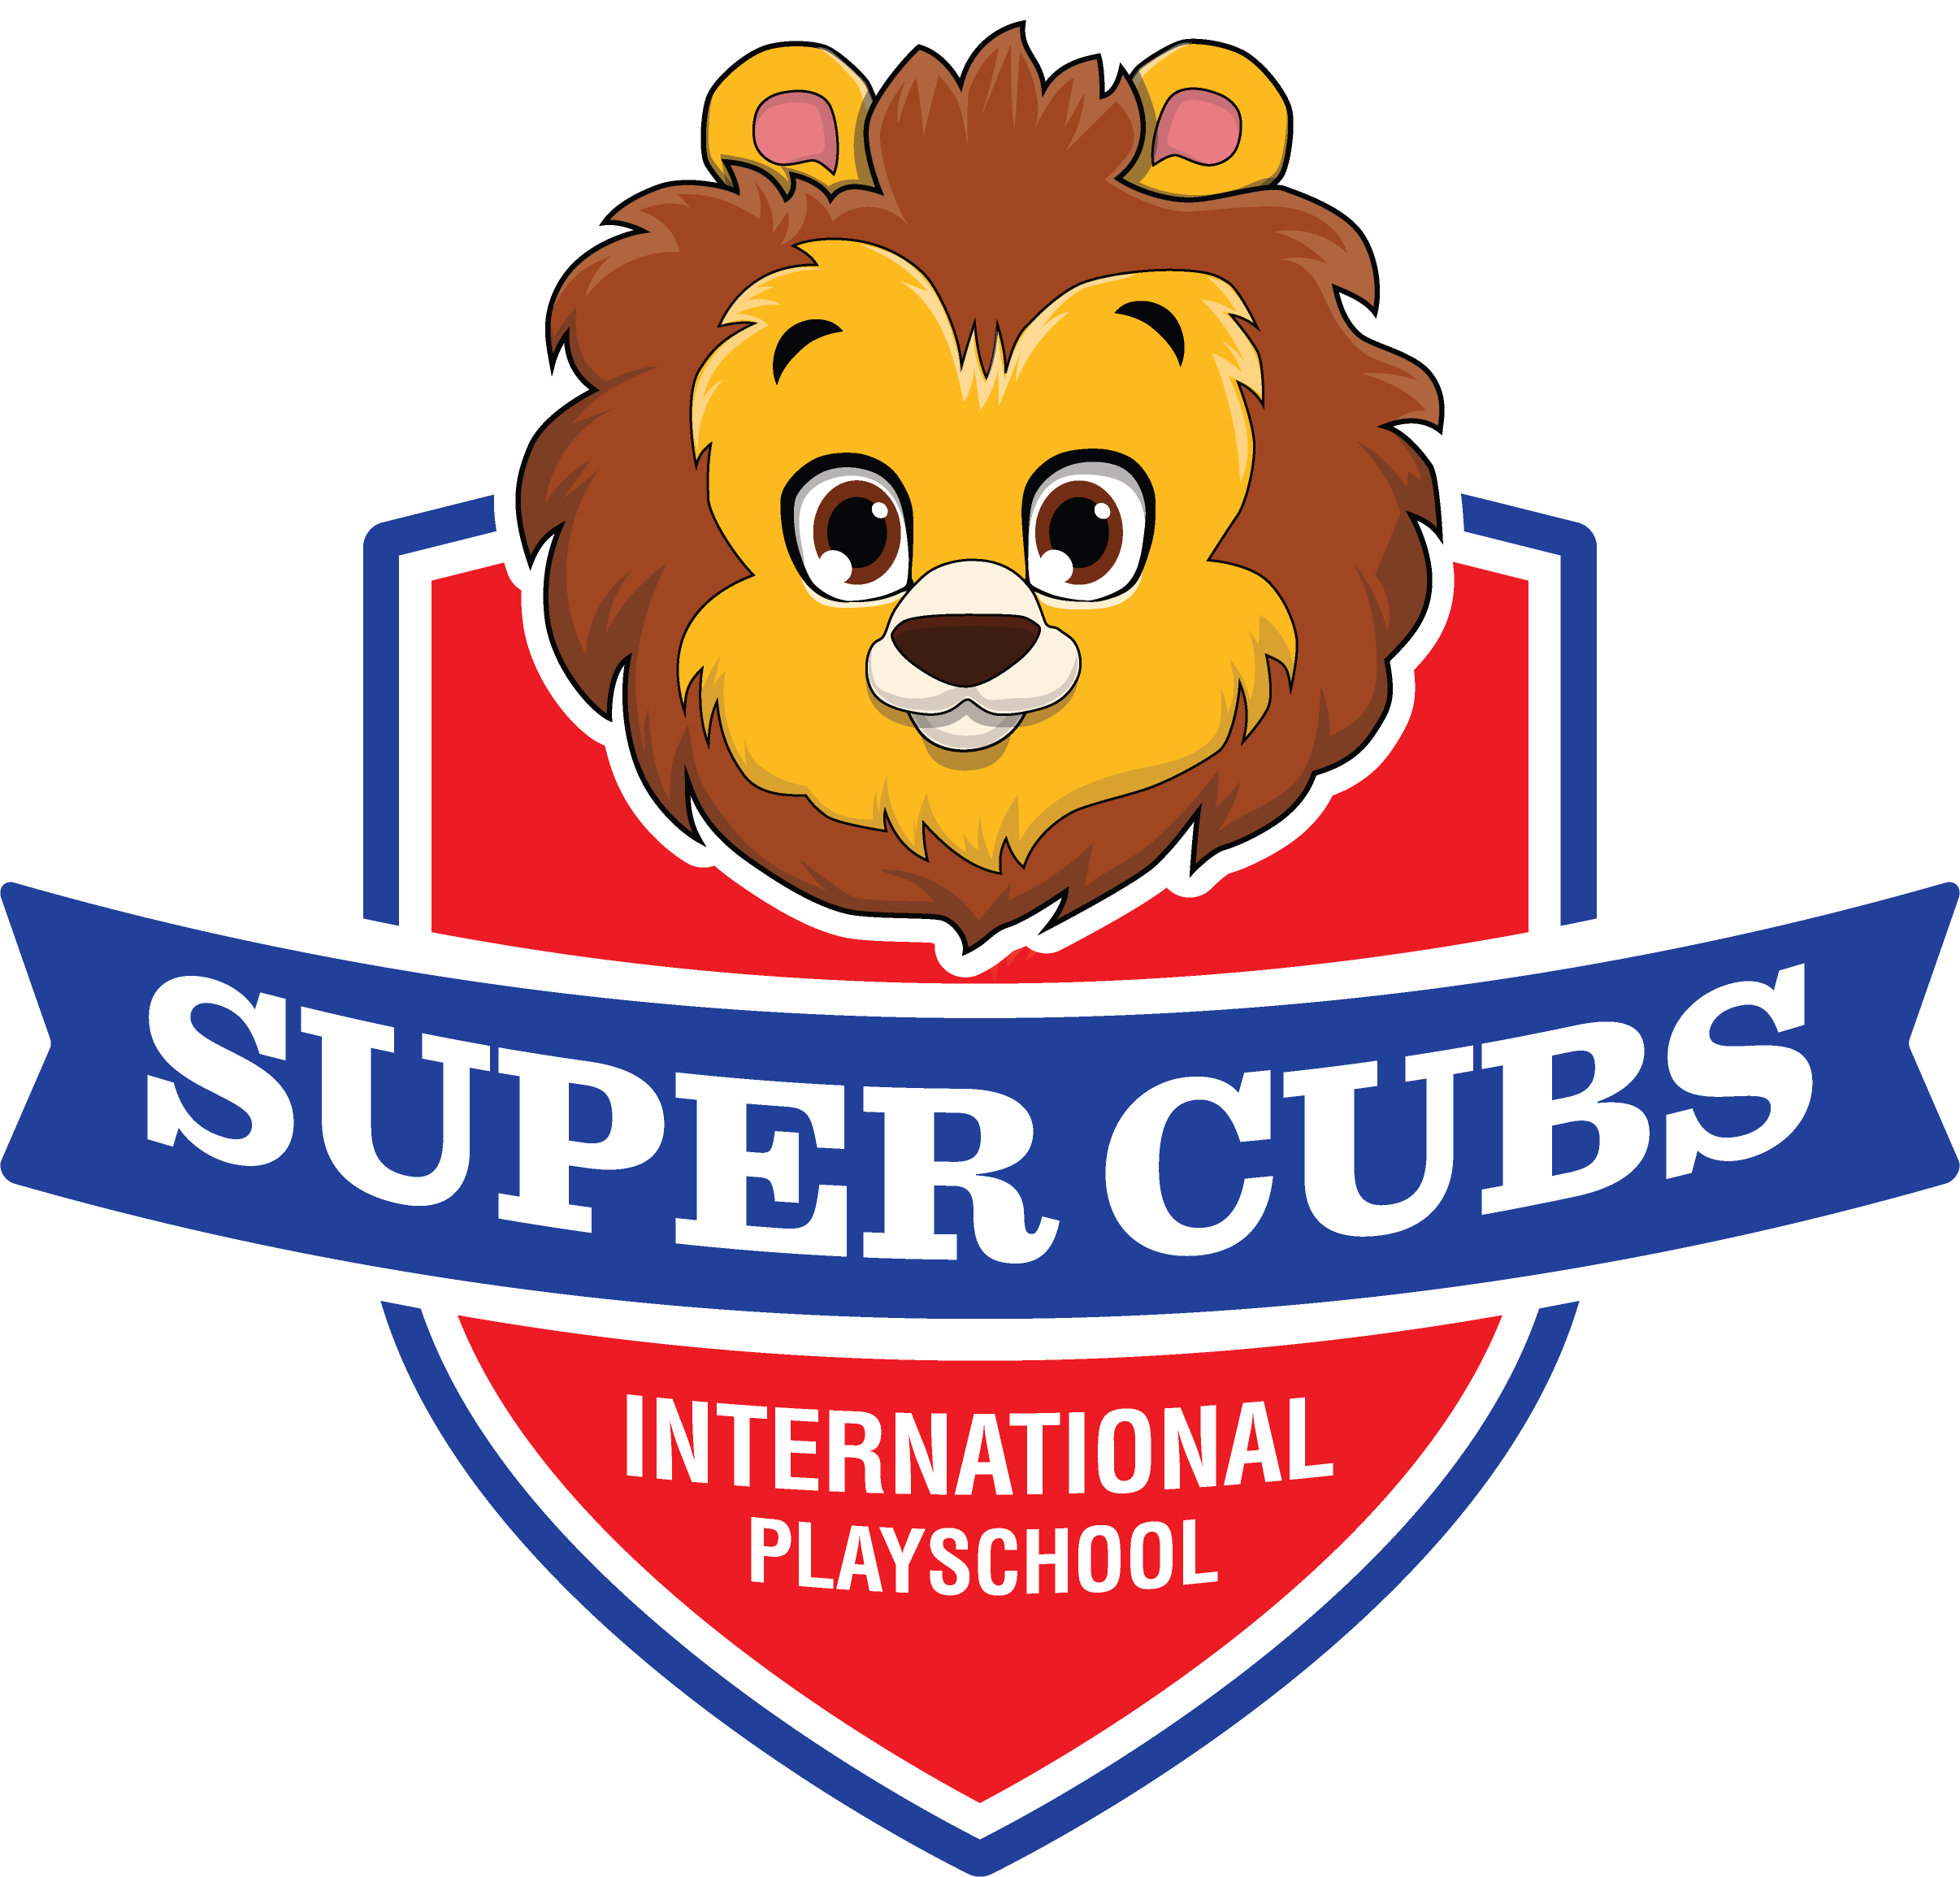 SuperCubs International Play School|Schools|Education